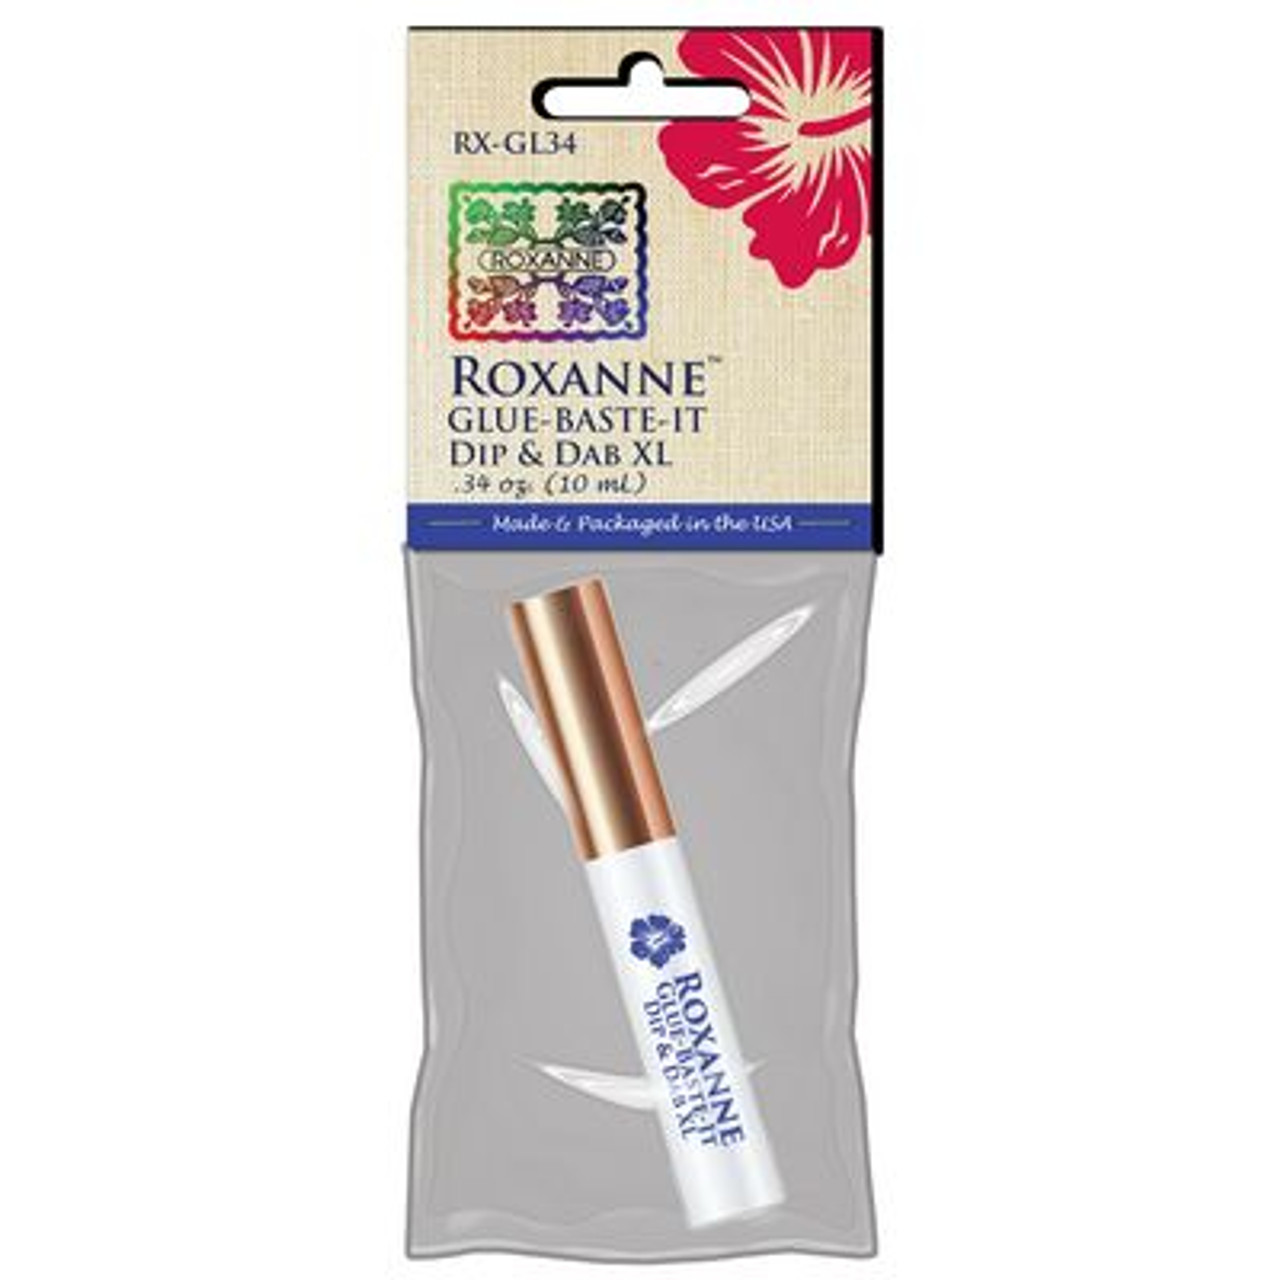 Roxanne Mini Glue-Baste-it- Shipping Included